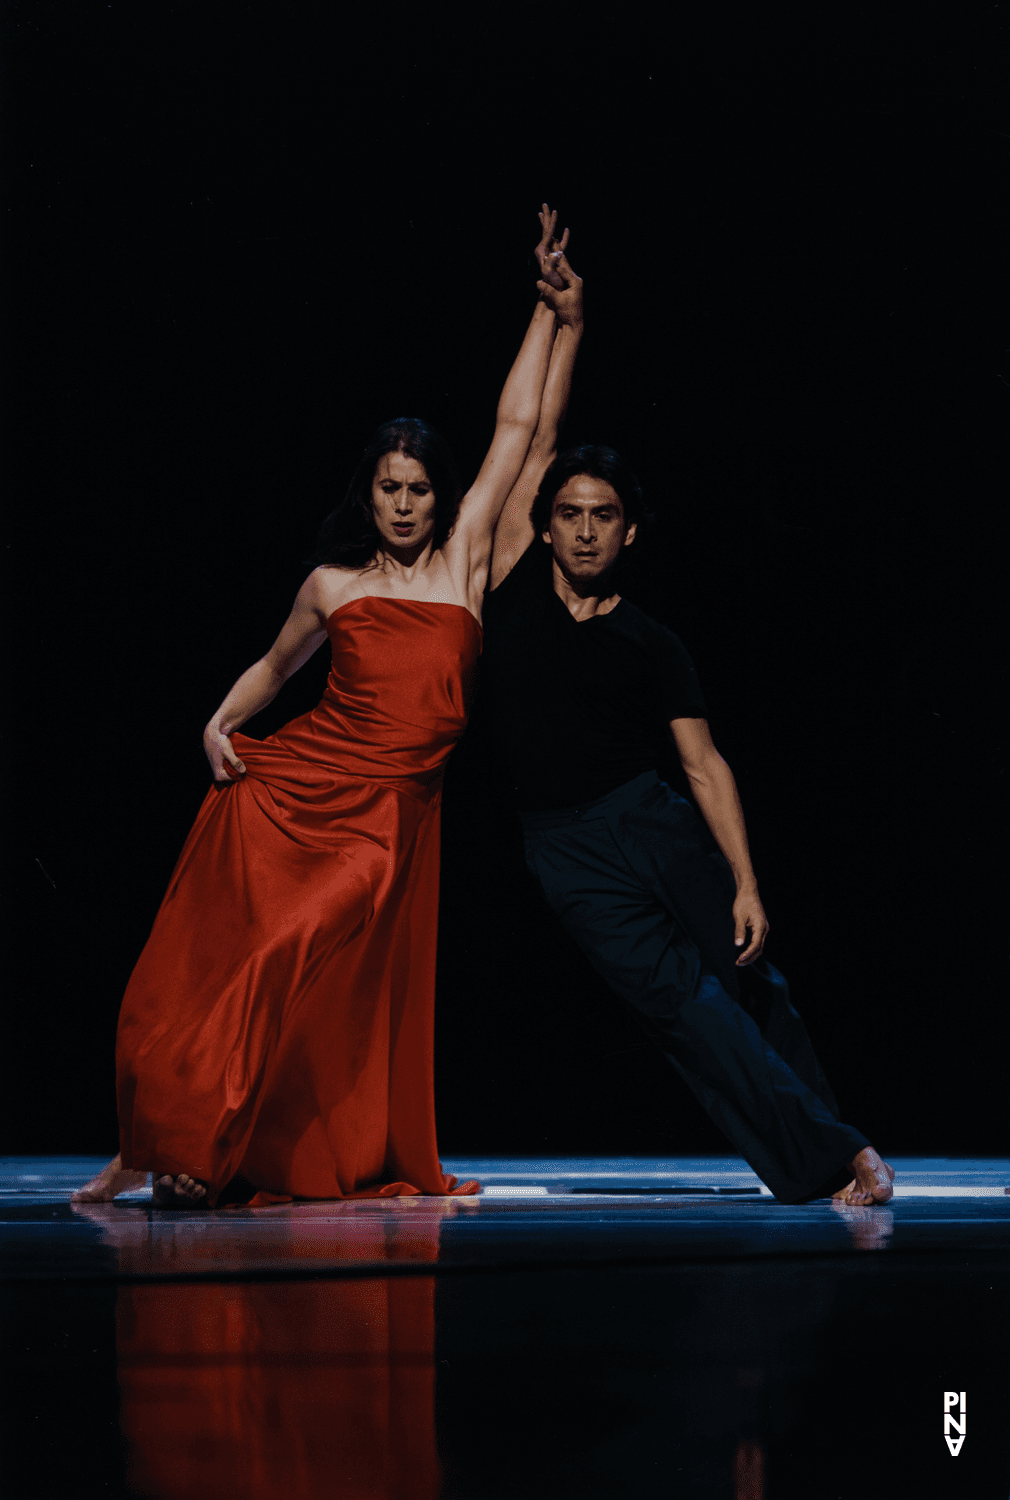 Eddie Martinez and Clémentine Deluy in “"... como el musguito en la piedra, ay si, si, si ..." (Like Moss on the Stone)” by Pina Bausch